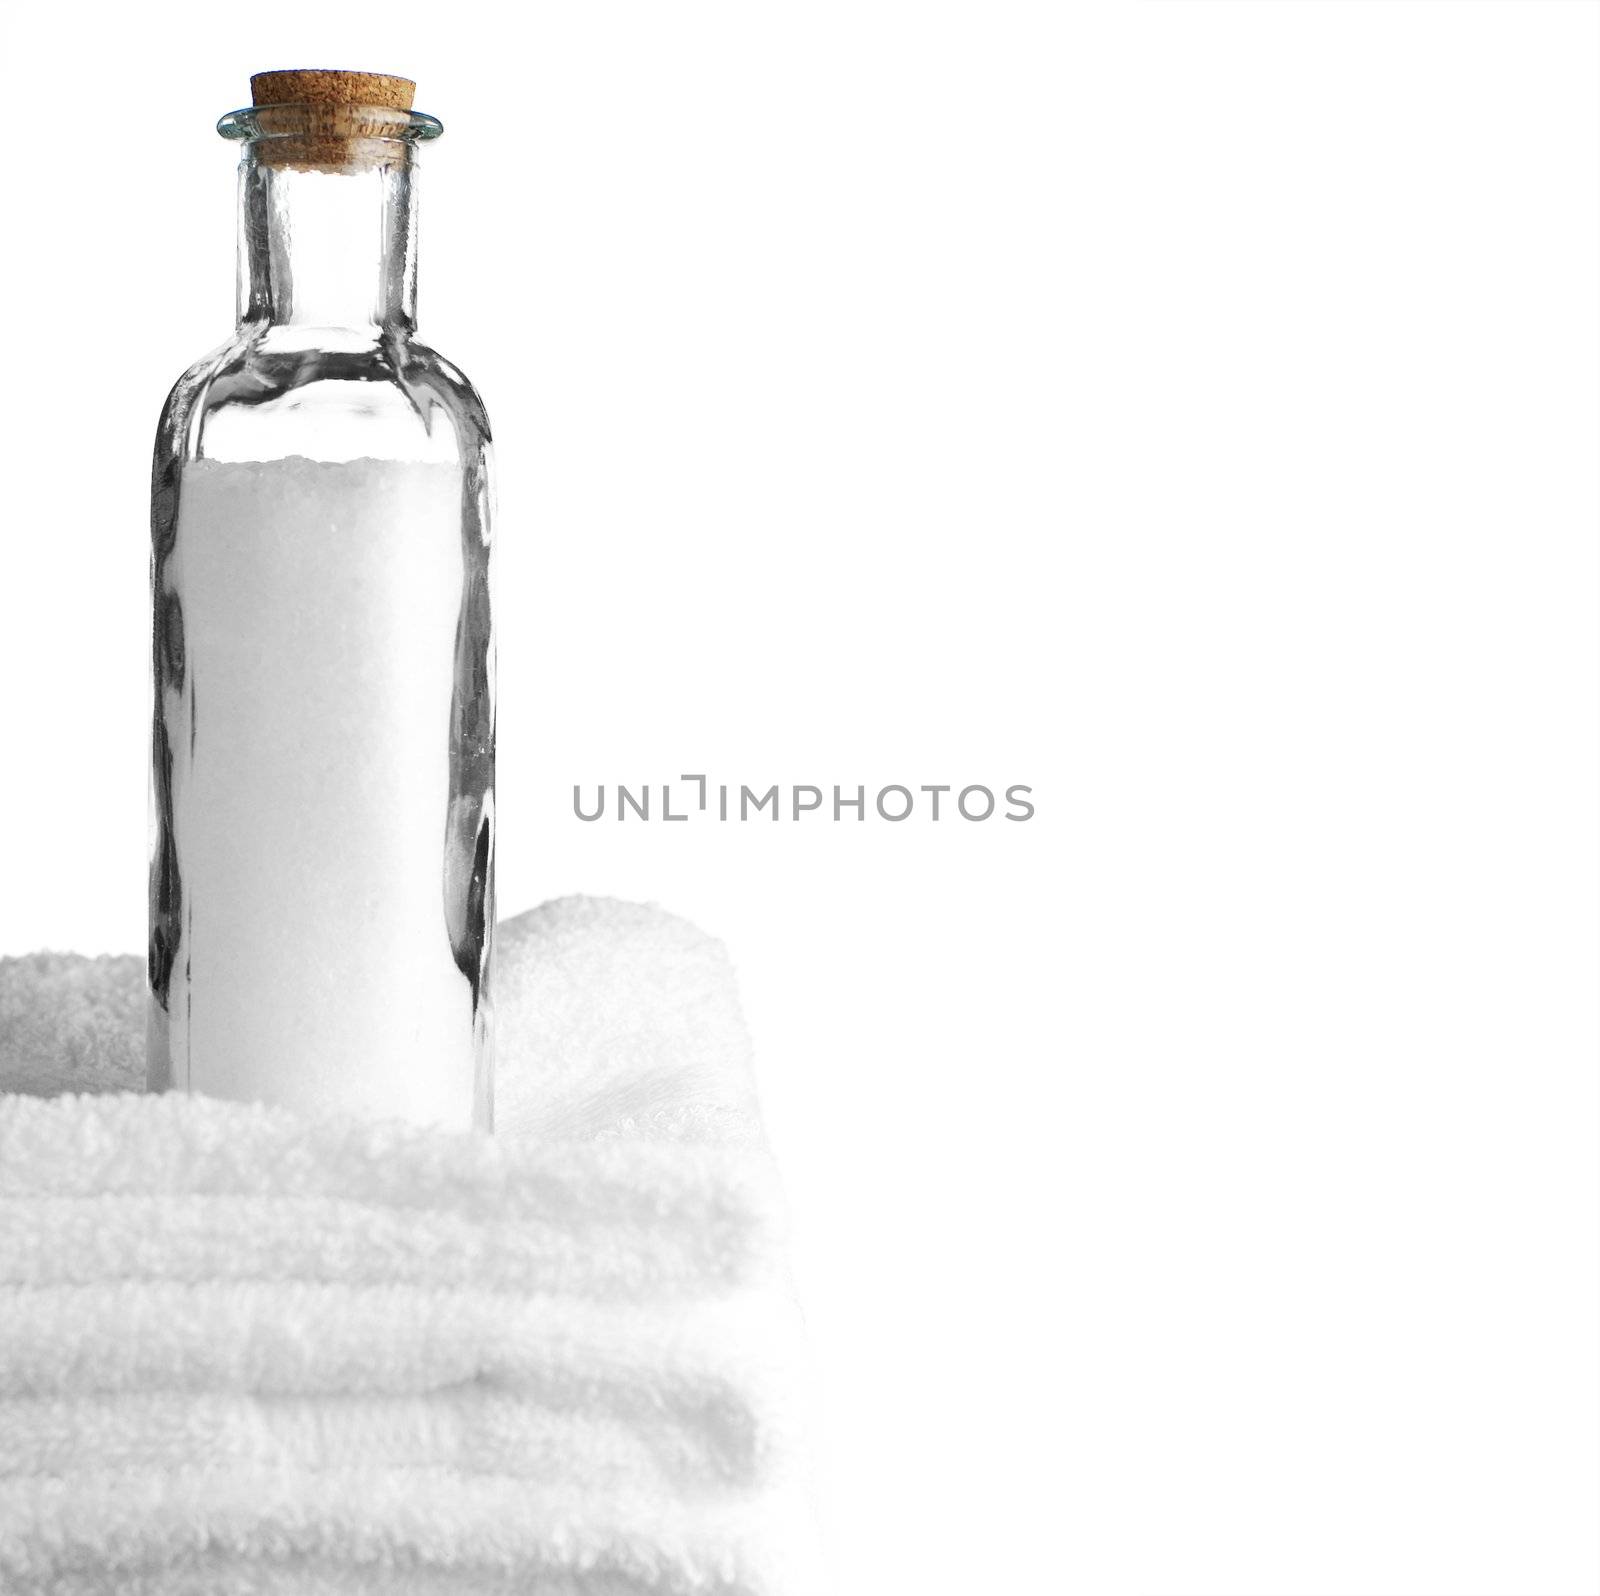 Bath towels and bath salt against a white background.